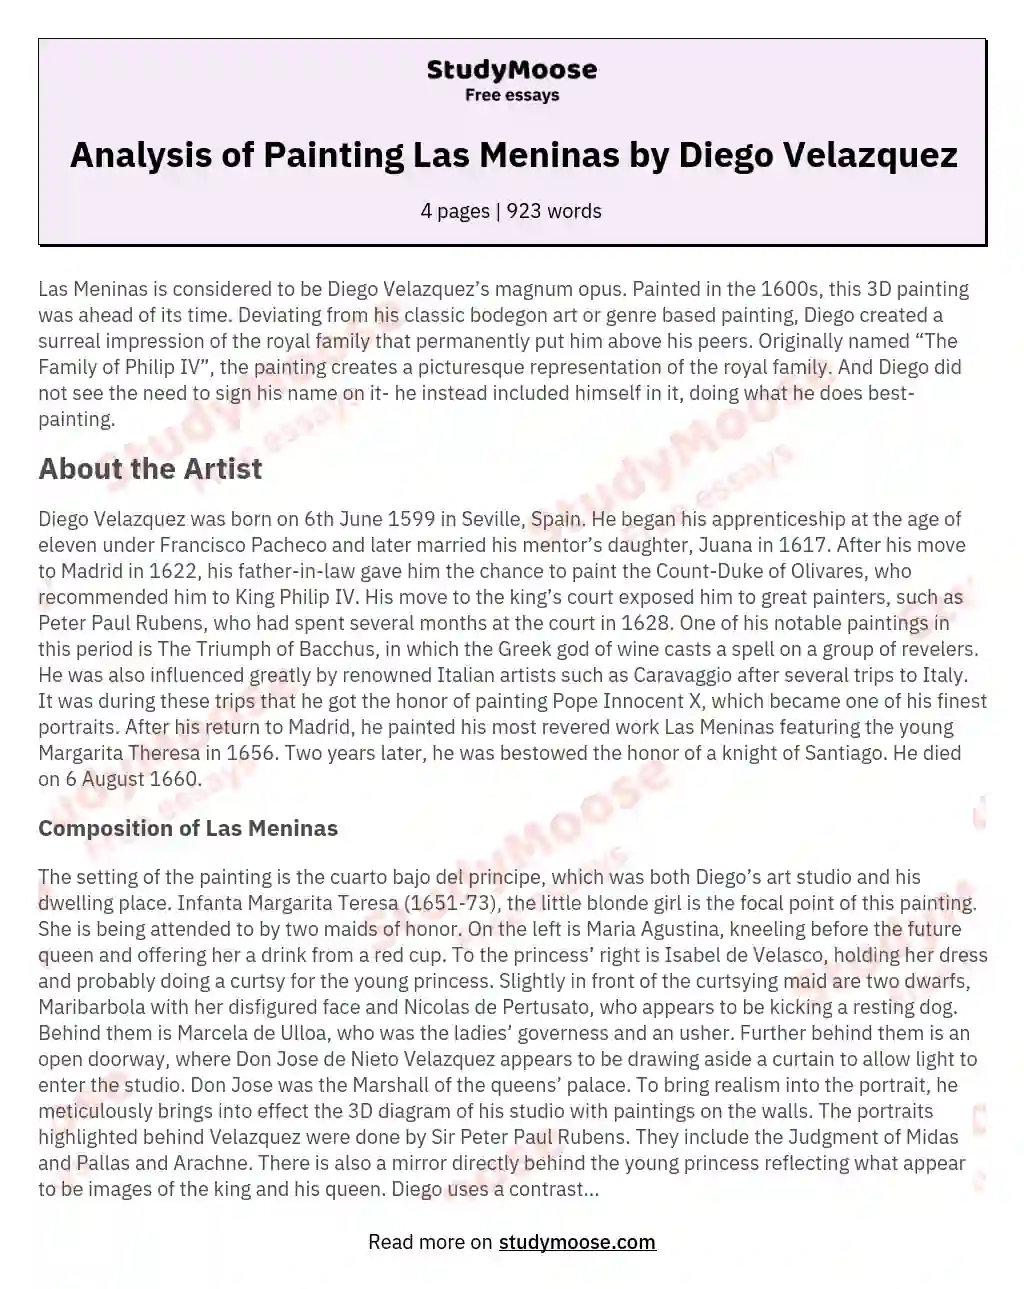 Analysis of Painting Las Meninas by Diego Velazquez